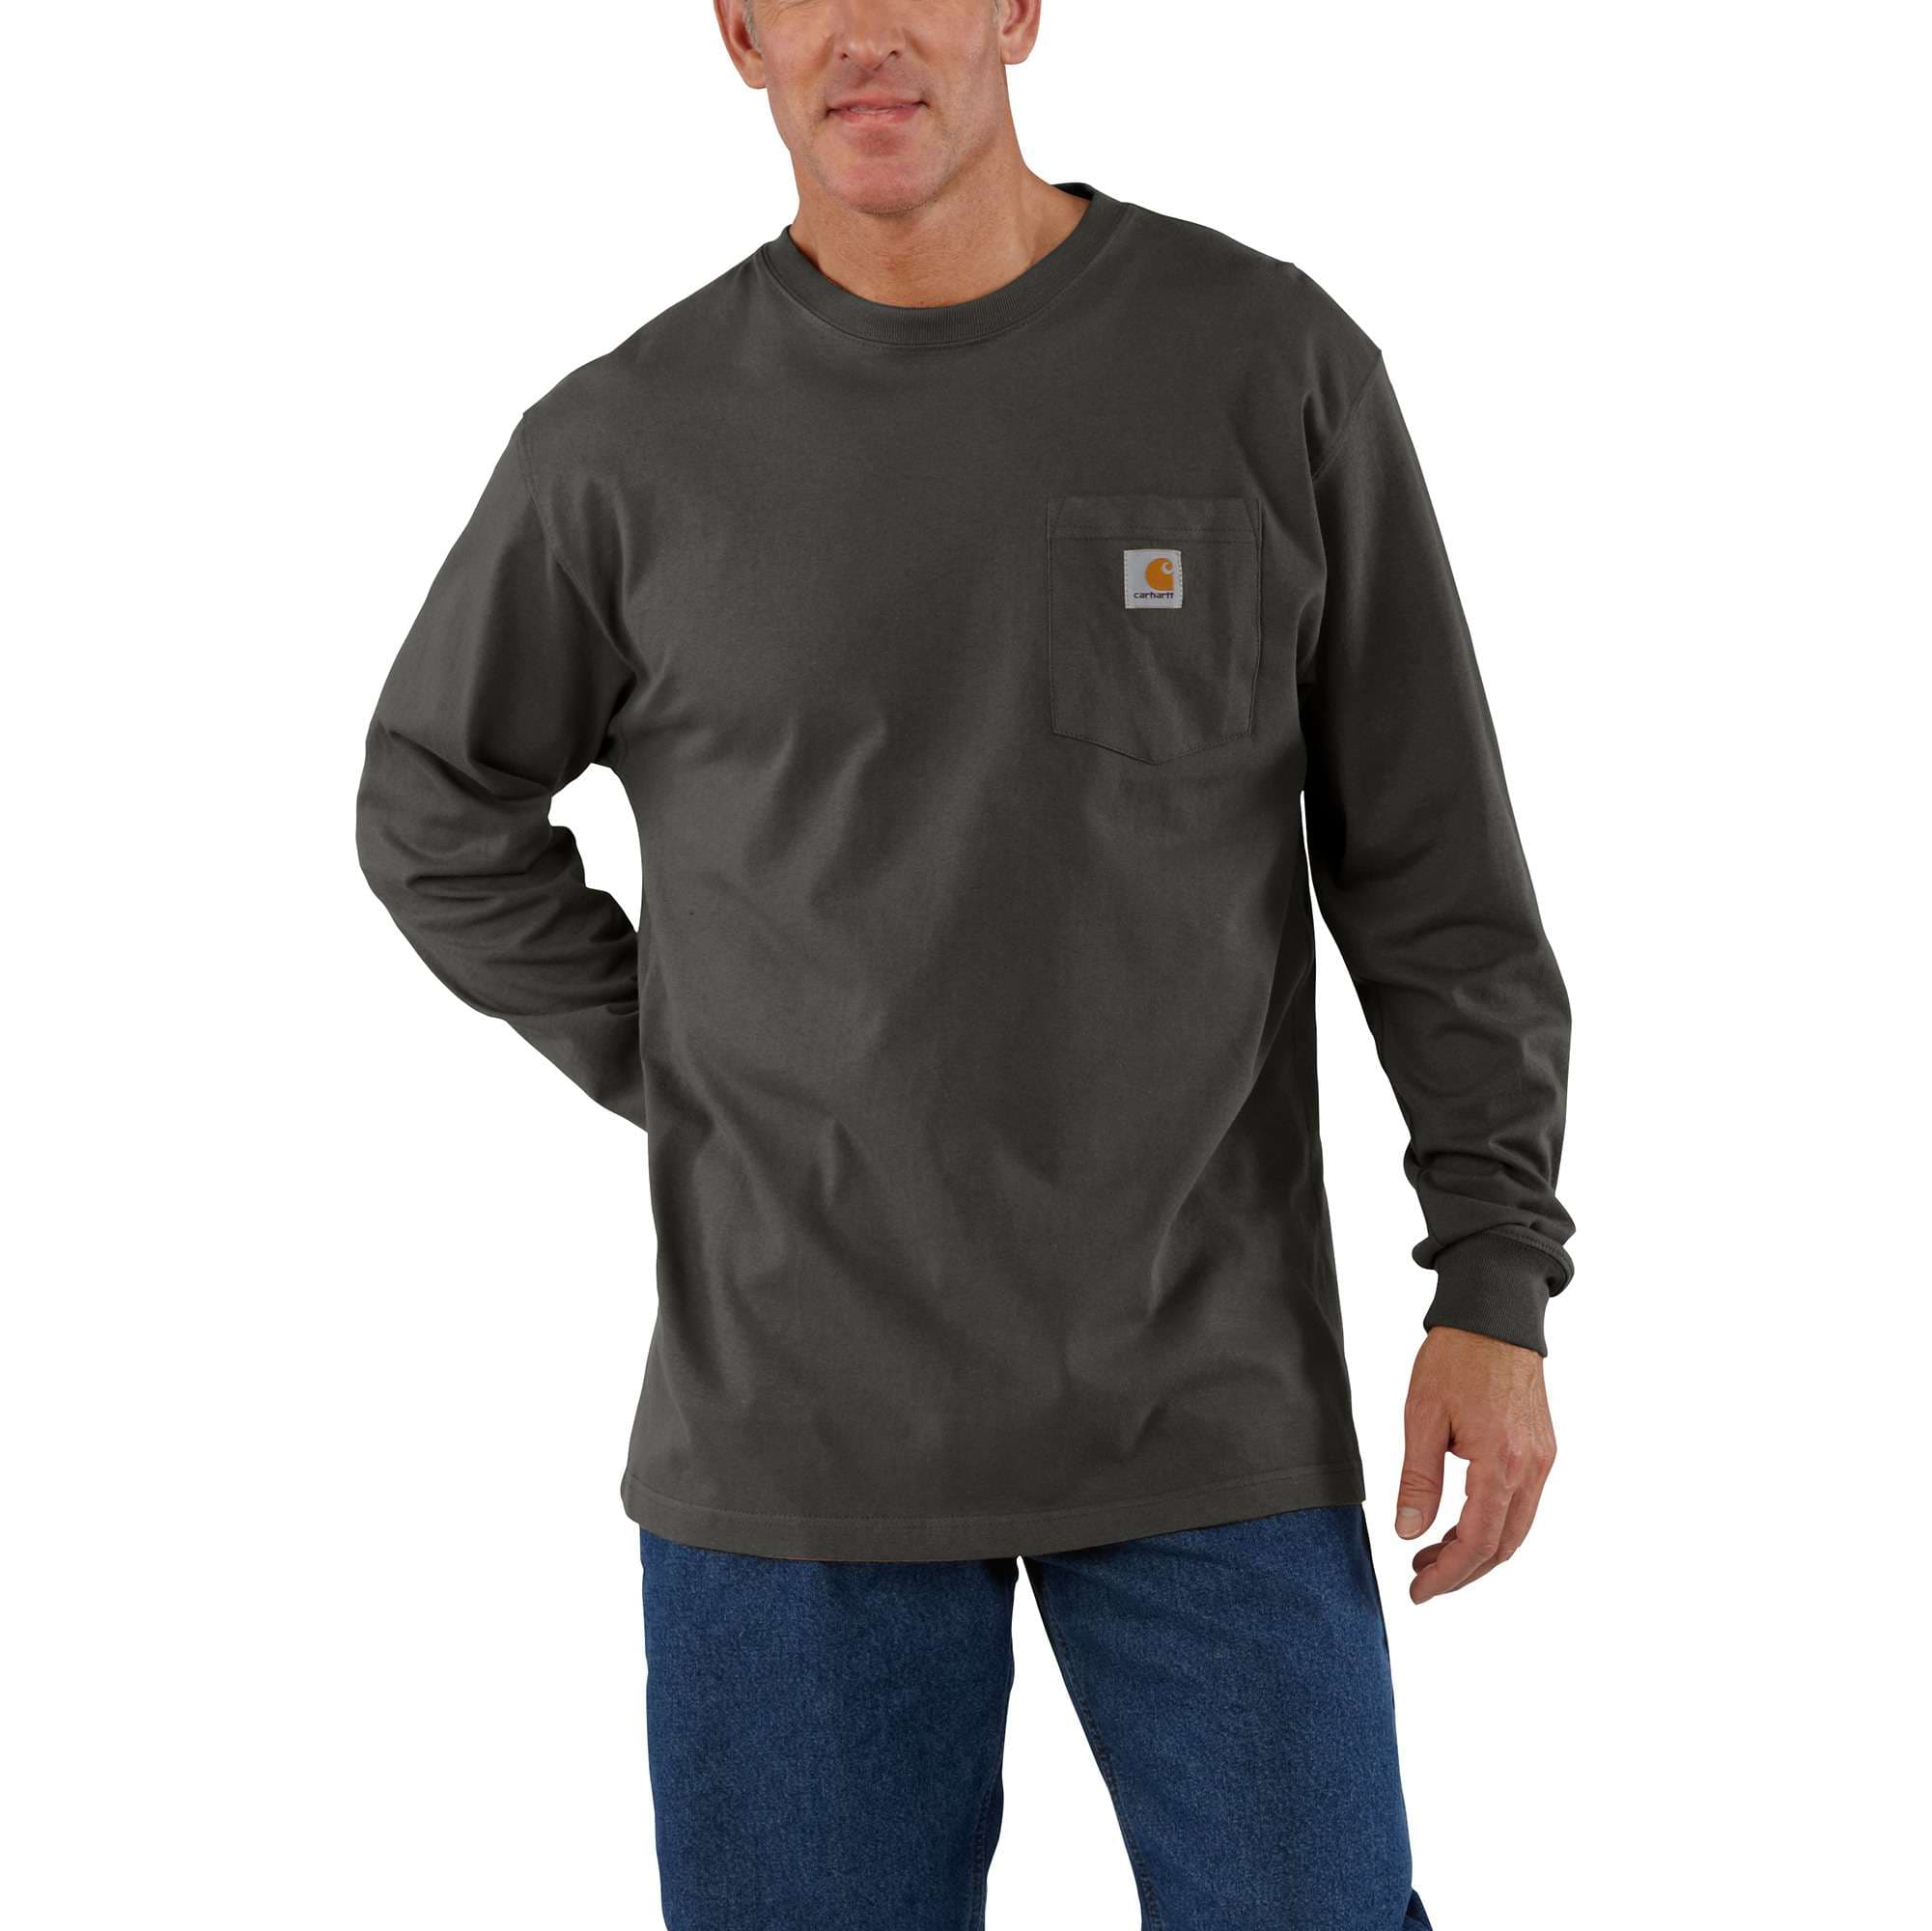 M size shirt XXL size shirt T-Shirt for Men Dog Style T- shirt L size shirt S size shirt XL size shirt